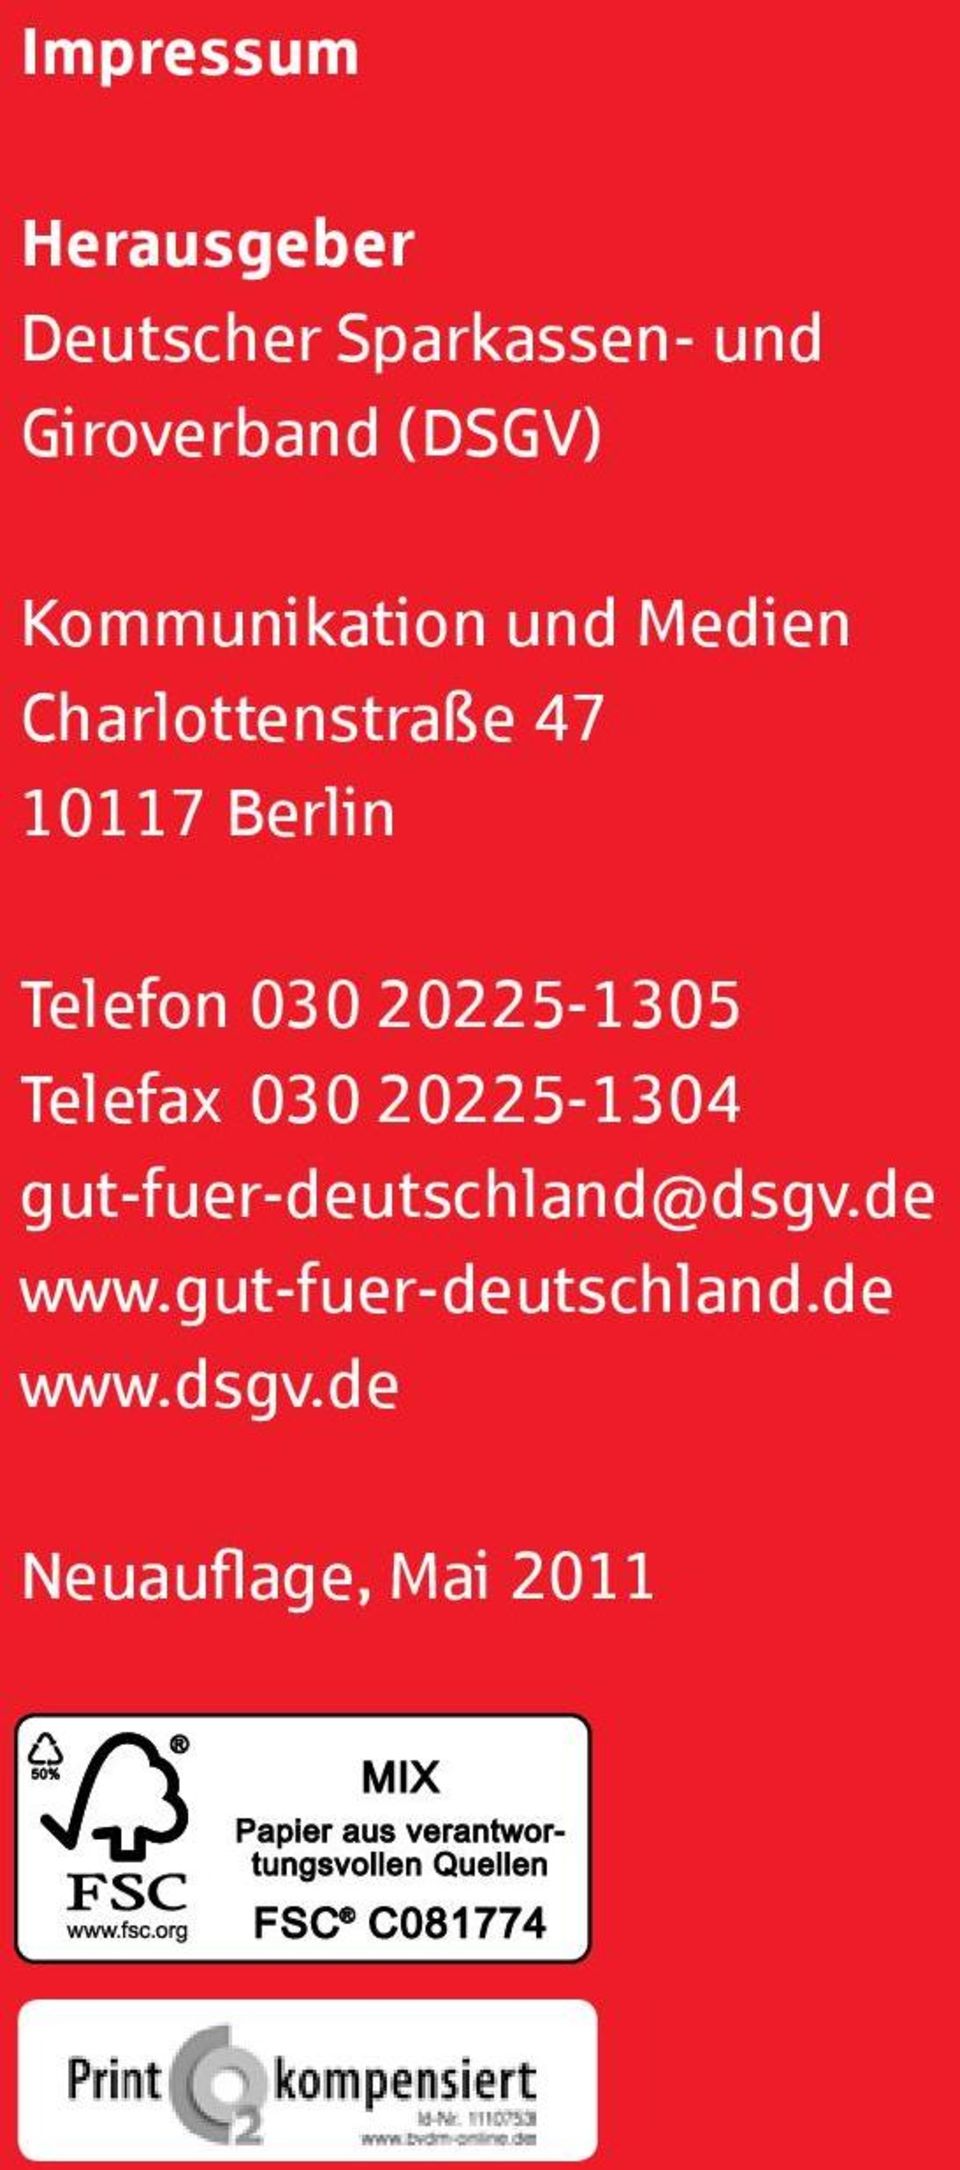 Telefon 030 20225-1305 Telefax 030 20225-1304